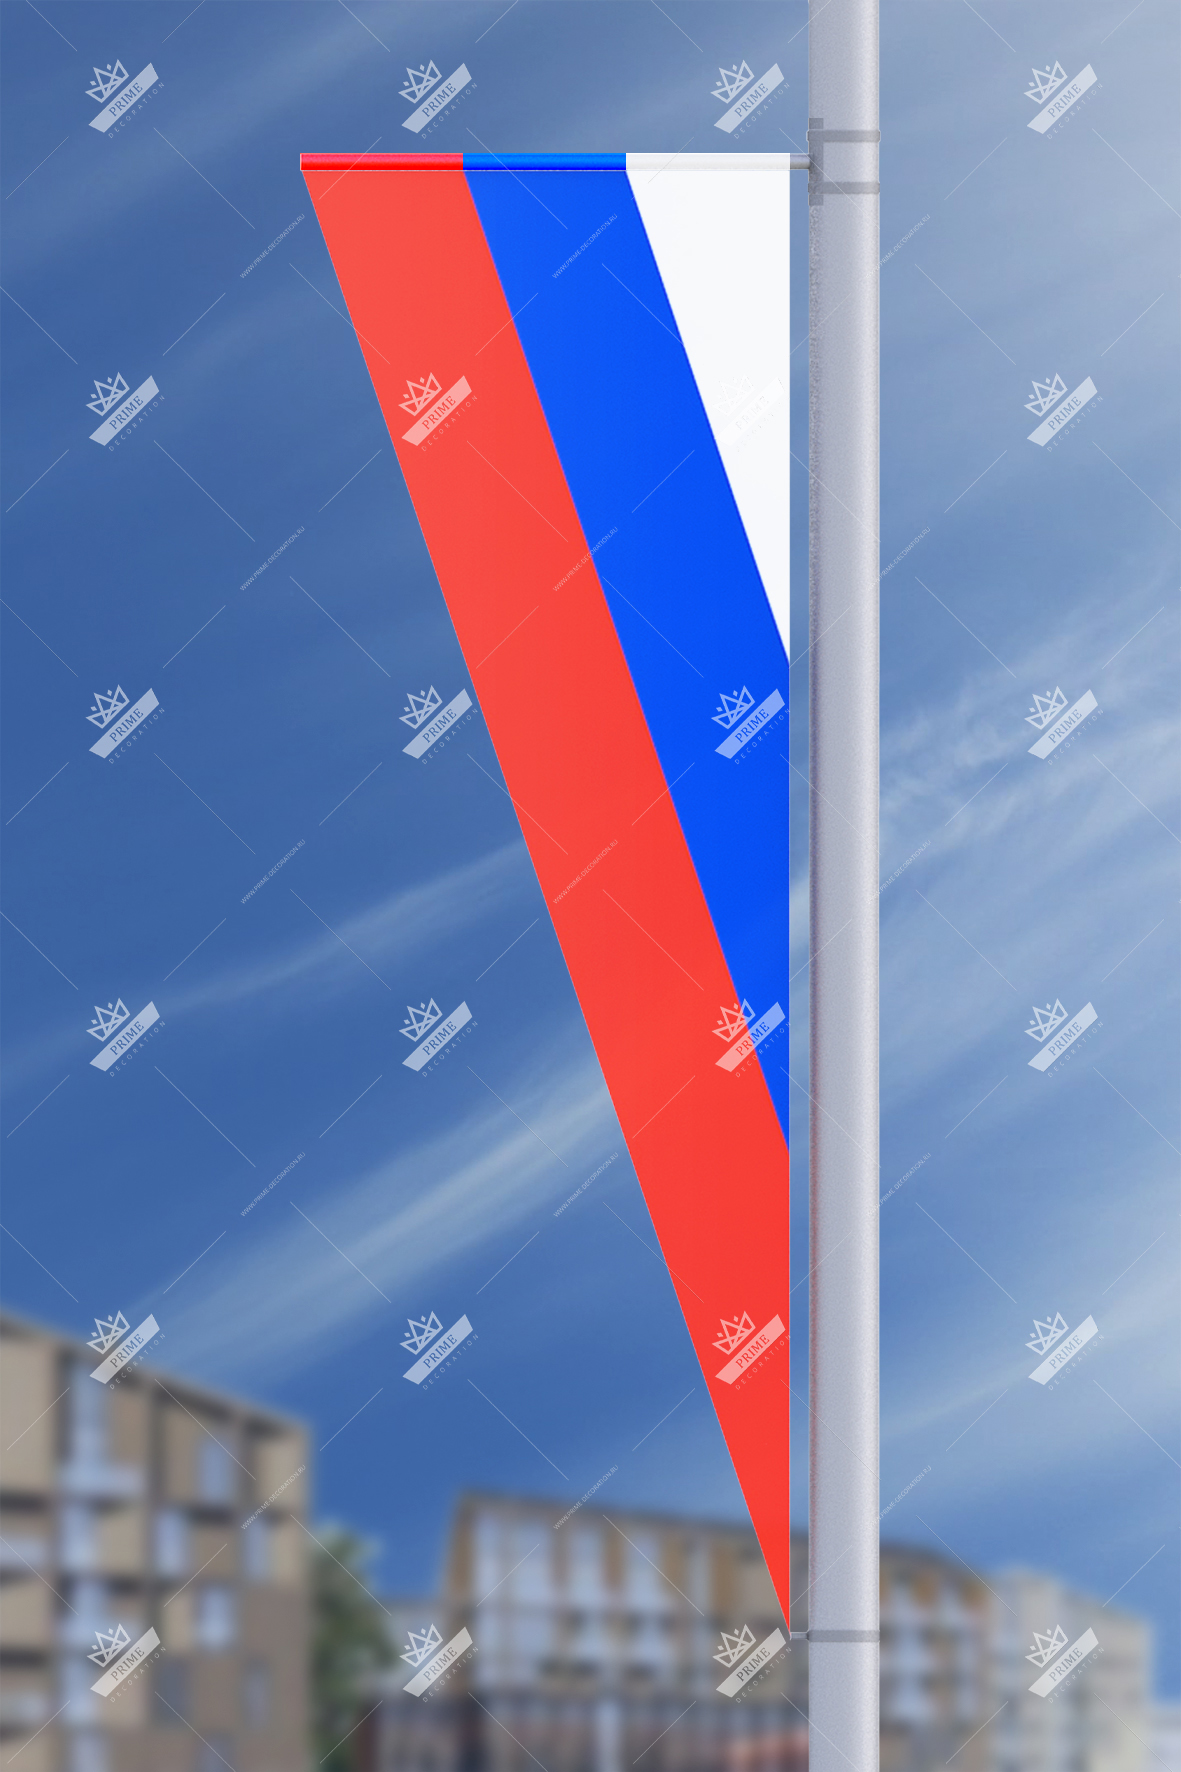 Флаги на столбы «Триколор» 8888888888888888888888